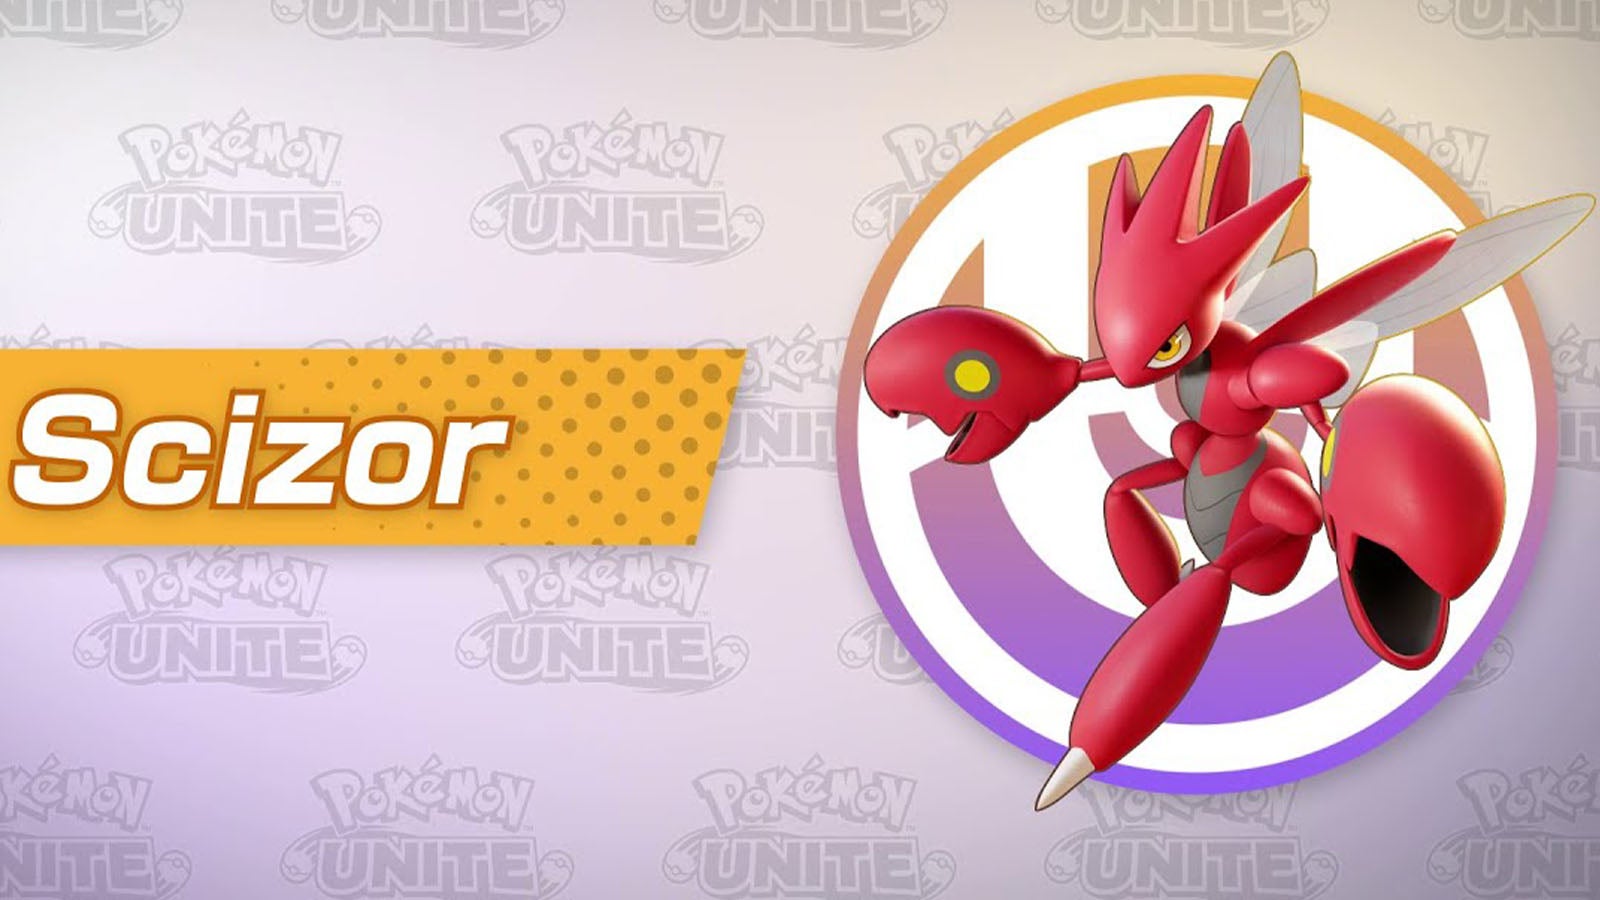 Image for Pokémon Unite Scizor build, best items and moveset